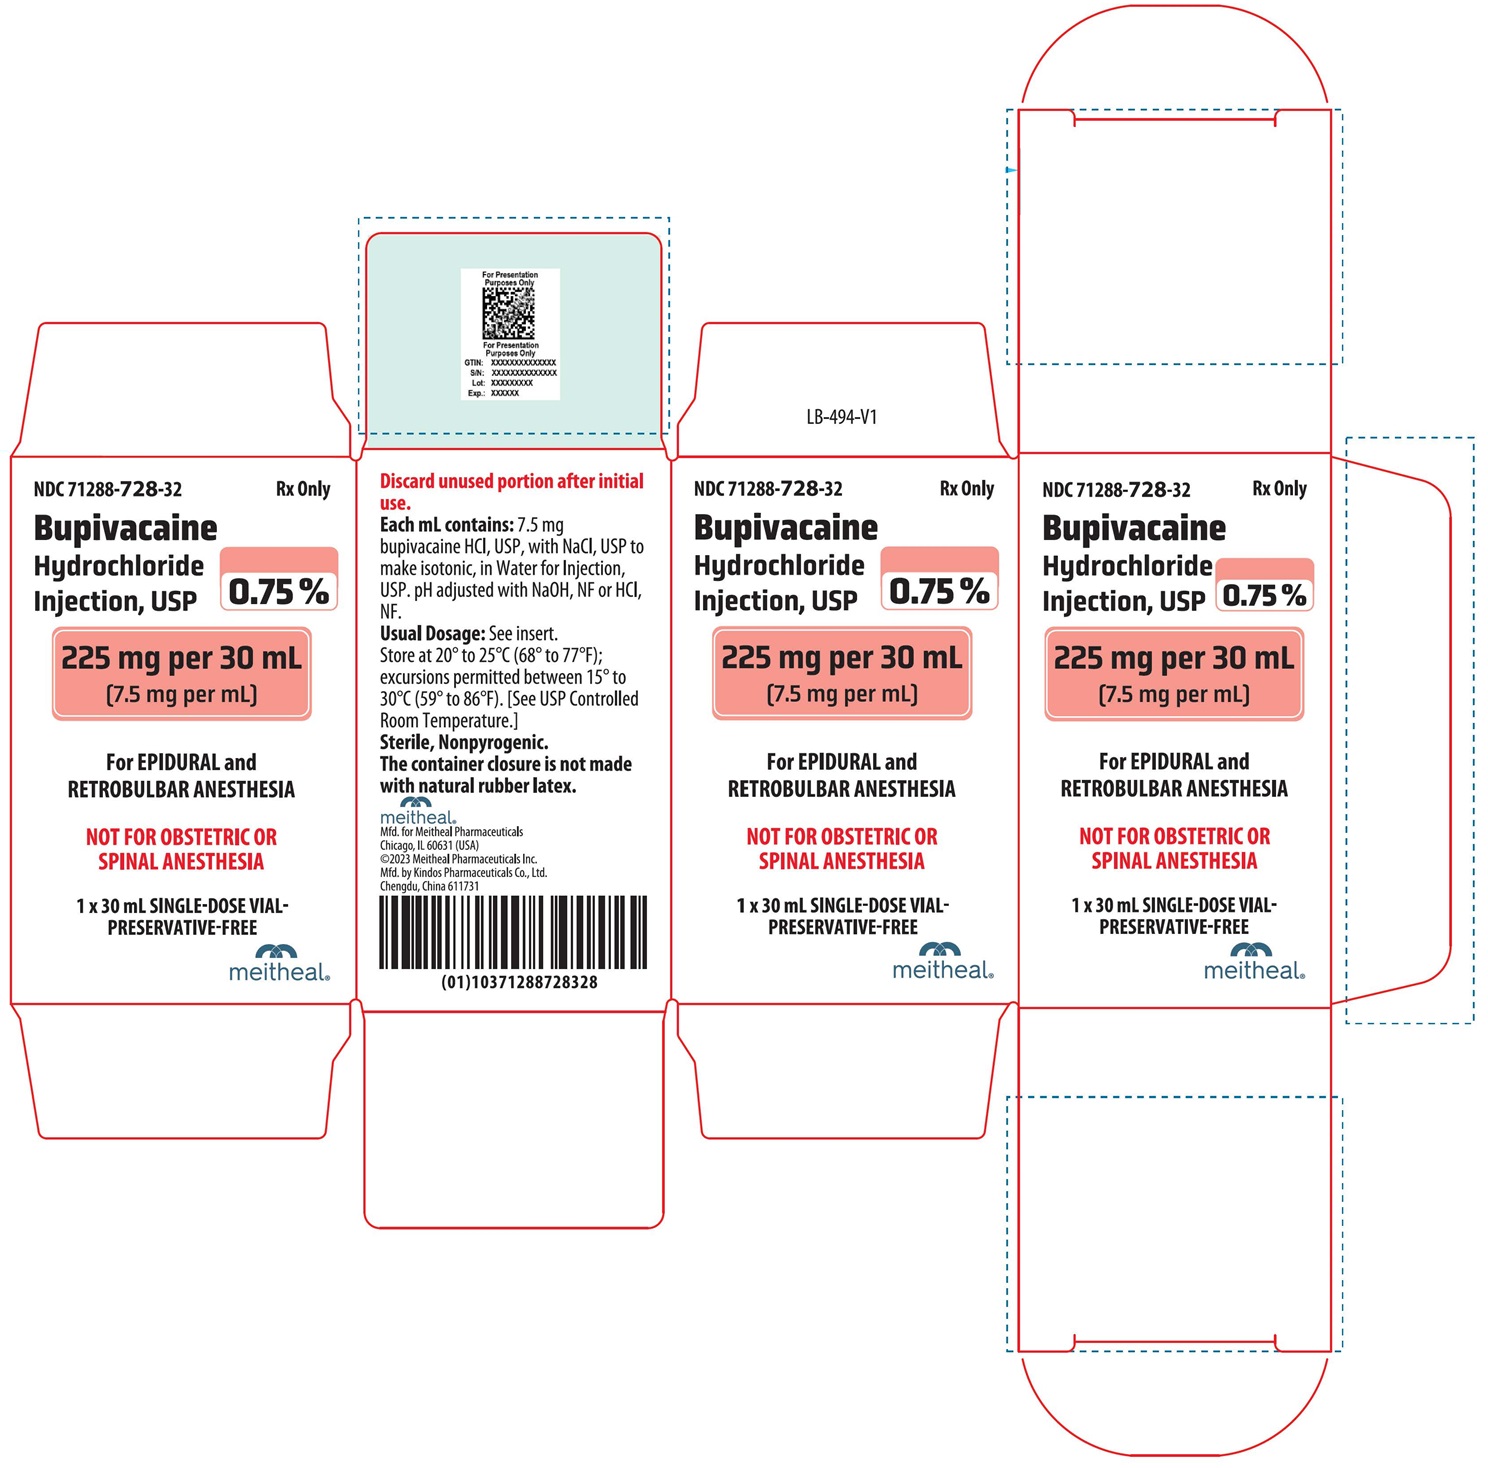 image descriptionPRINCIPAL DISPLAY PANEL – 0.75% Bupivacaine Hydrochloride Injection, USP 30 mL Carton